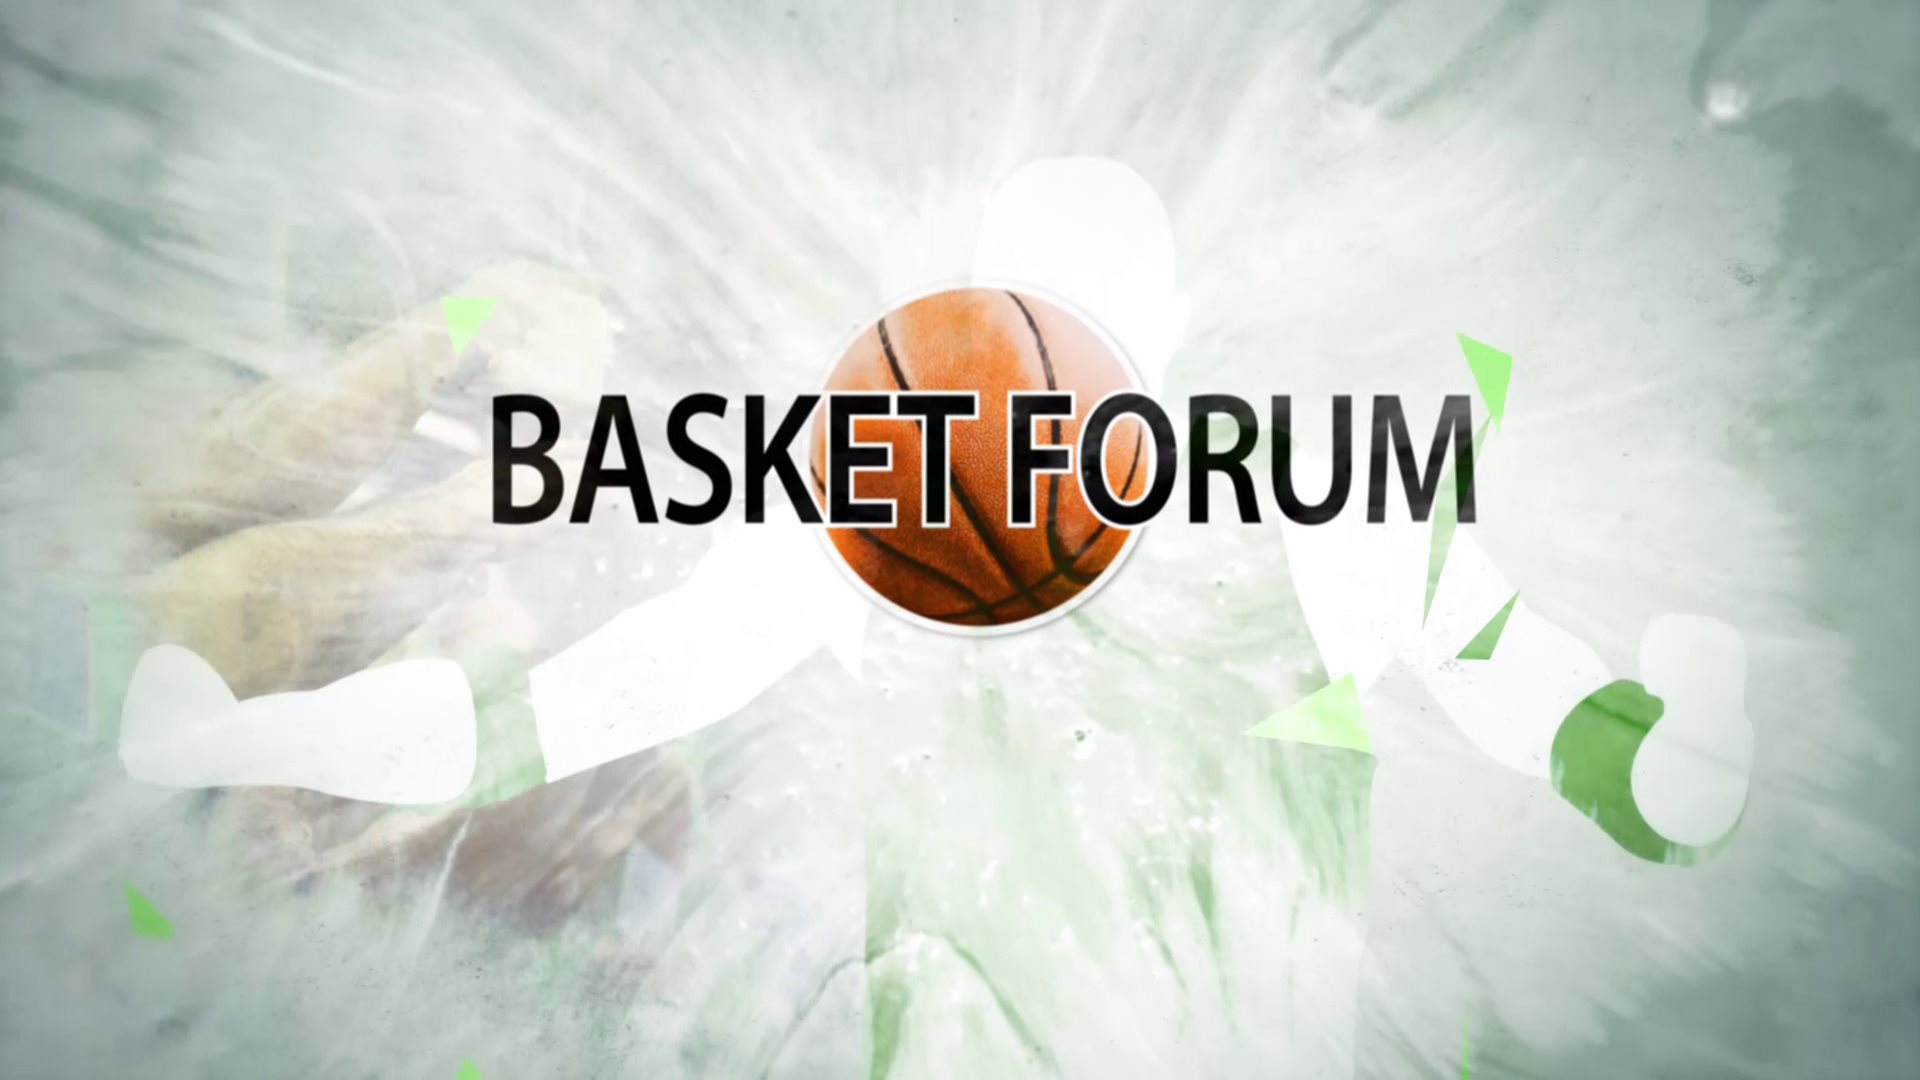 Basket forum